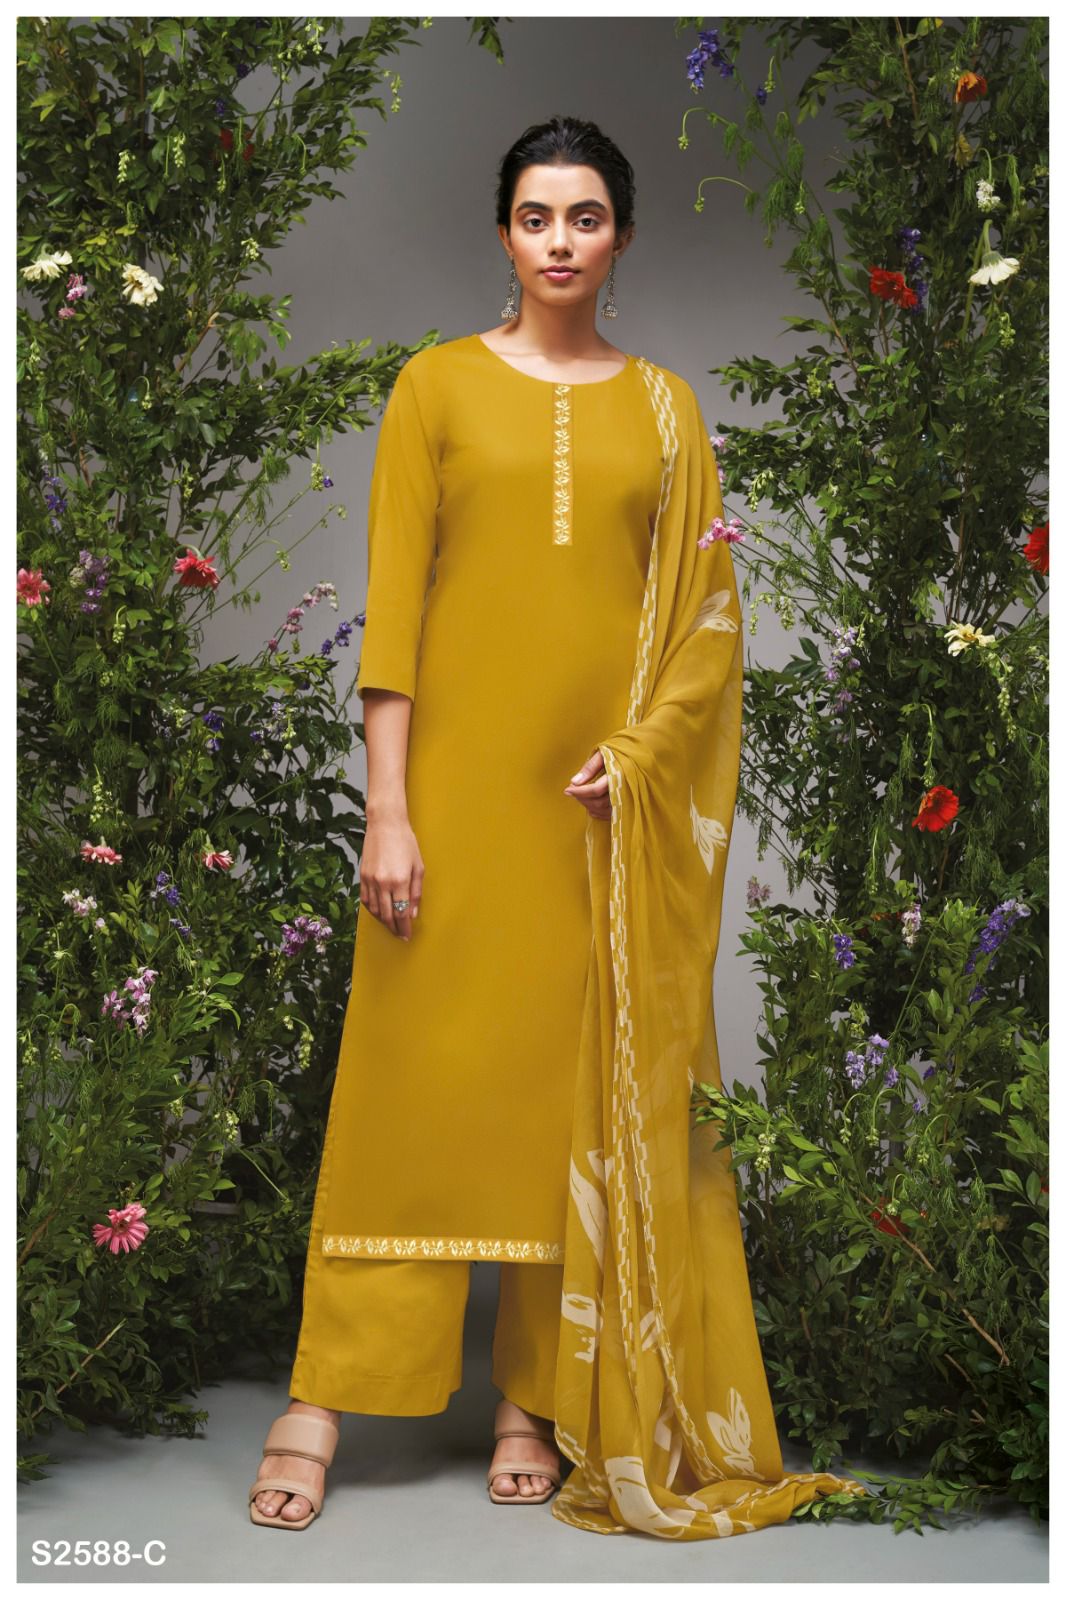 Ridhima 2588 Ganga Cotton Silk Plazzo Style Suits Supplier India